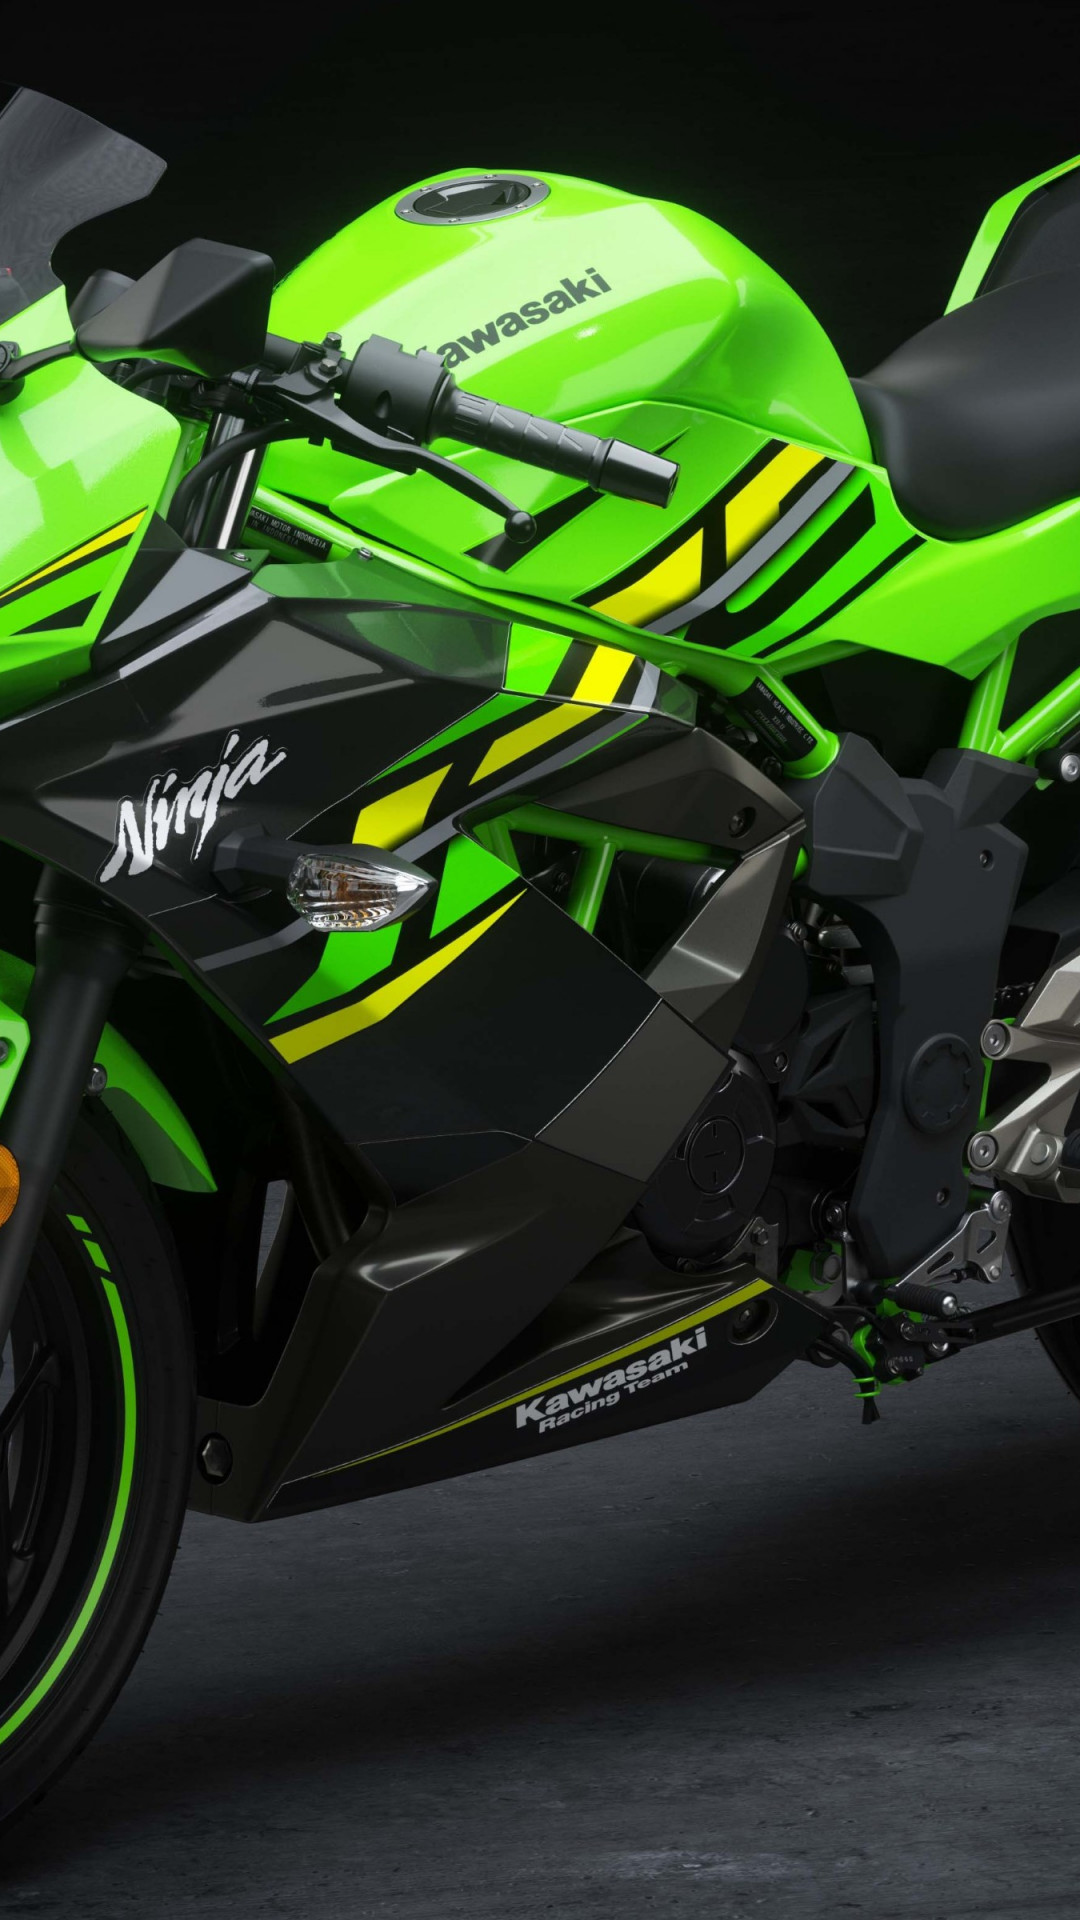 Kawasaki Ninja H2R Wallpapers  Top 35 Best Ninja H2R Backgrounds Download